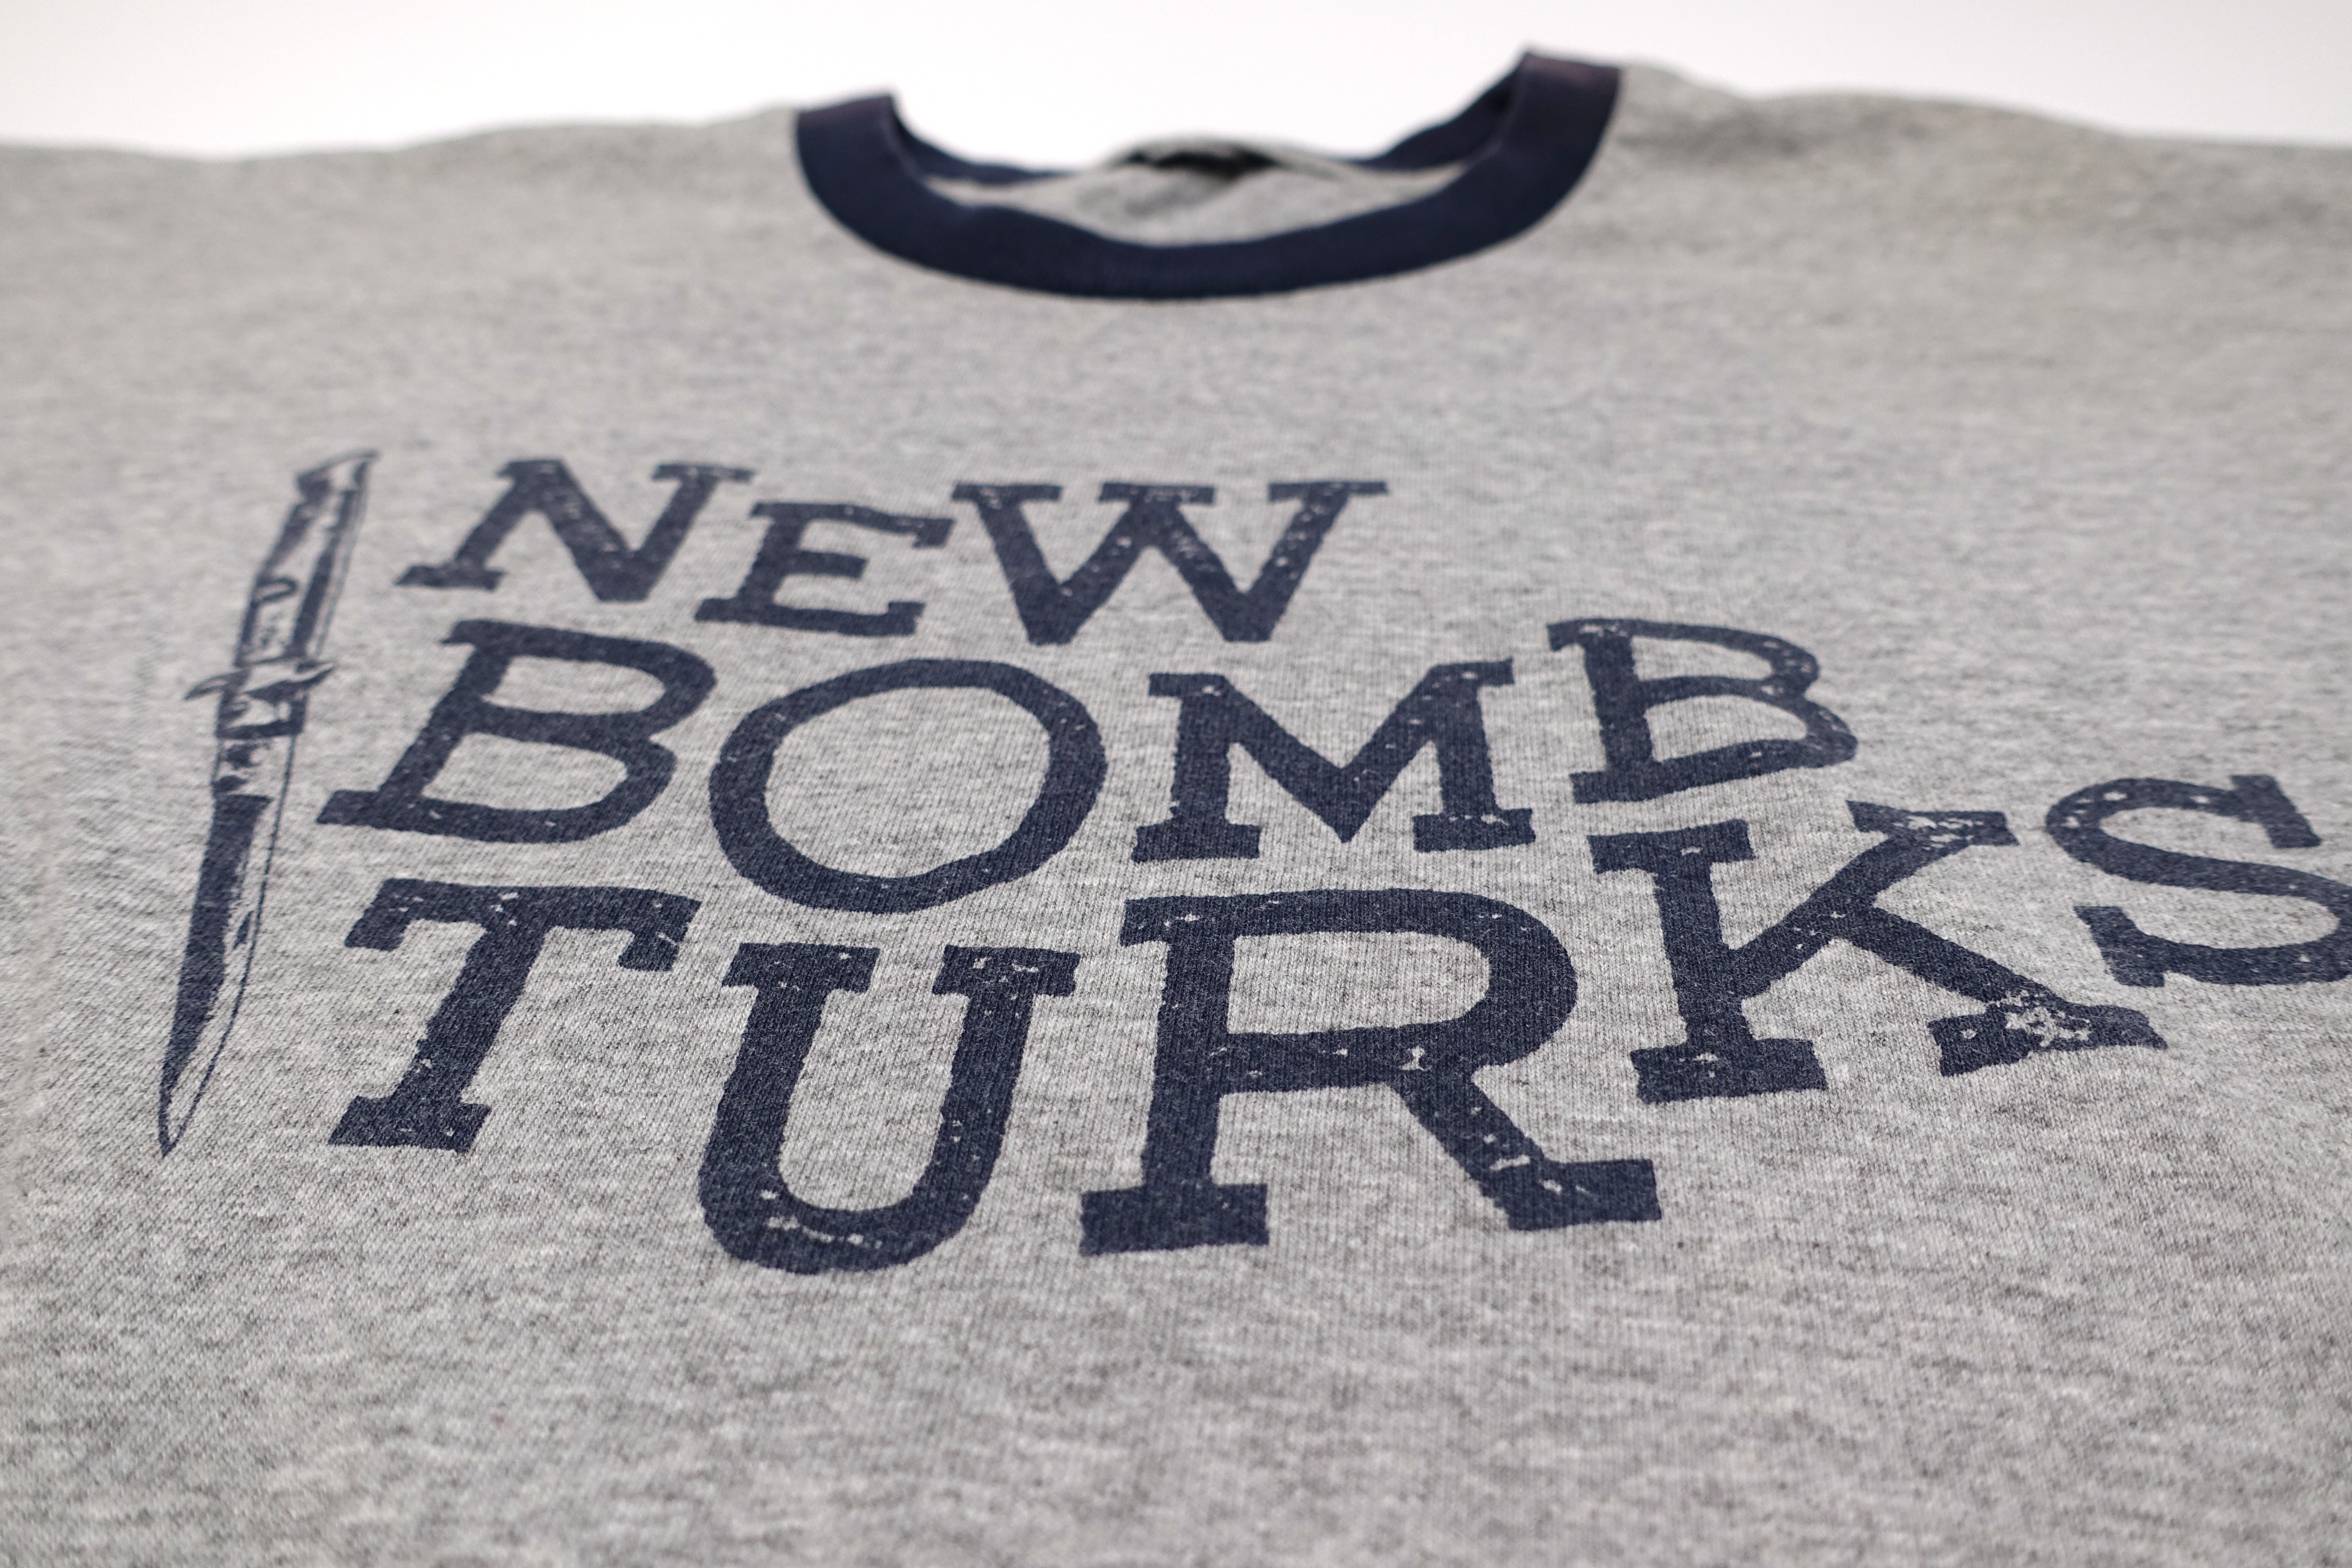 New Bomb Turks - Switchblade 90's Ringer Tour Shirt Size XL